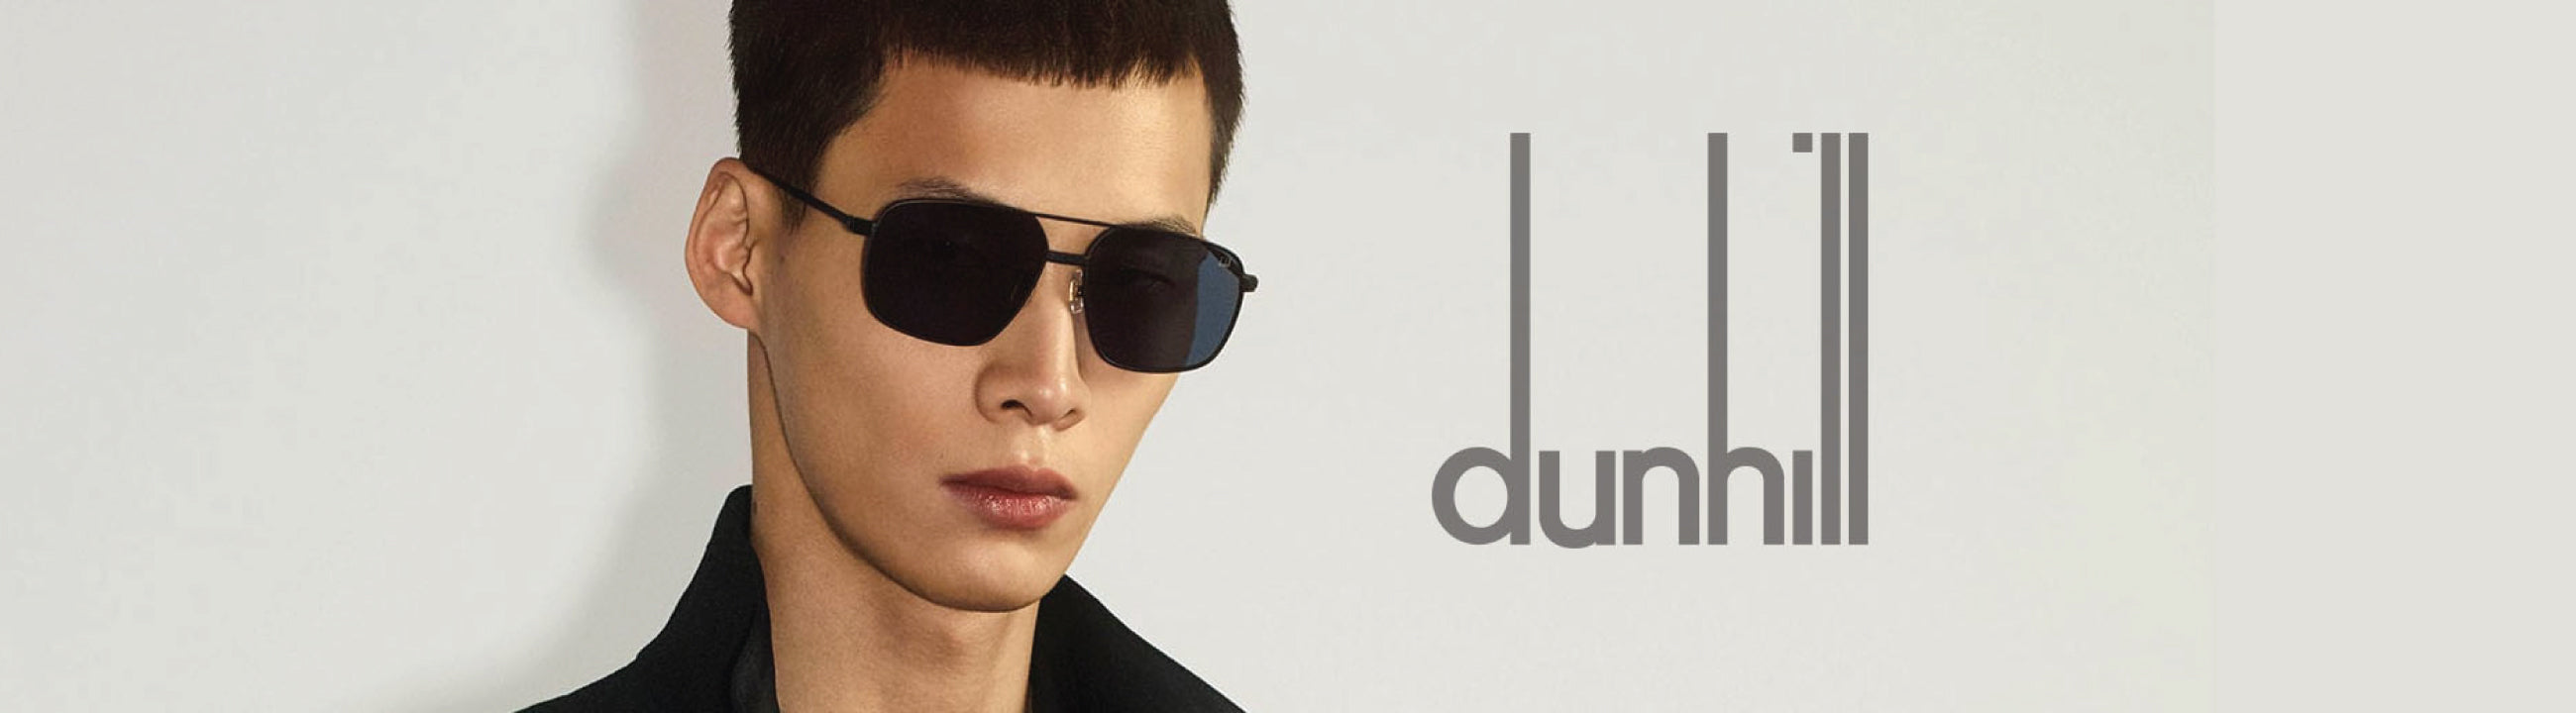 Dunhill Sunglasses